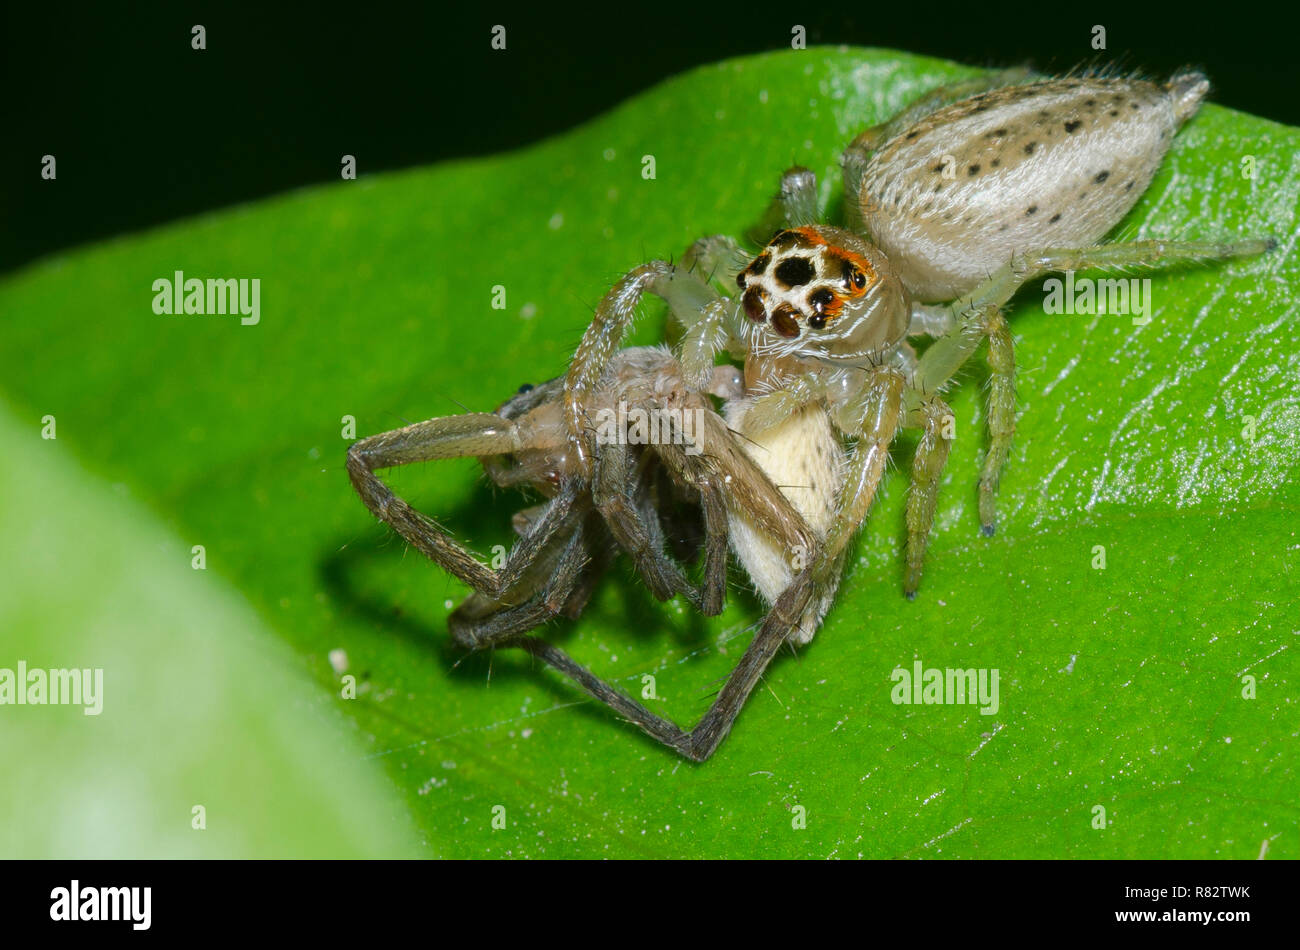 Jumping Spider, Thiodina sp., feeding on captured spider prey Stock Photo